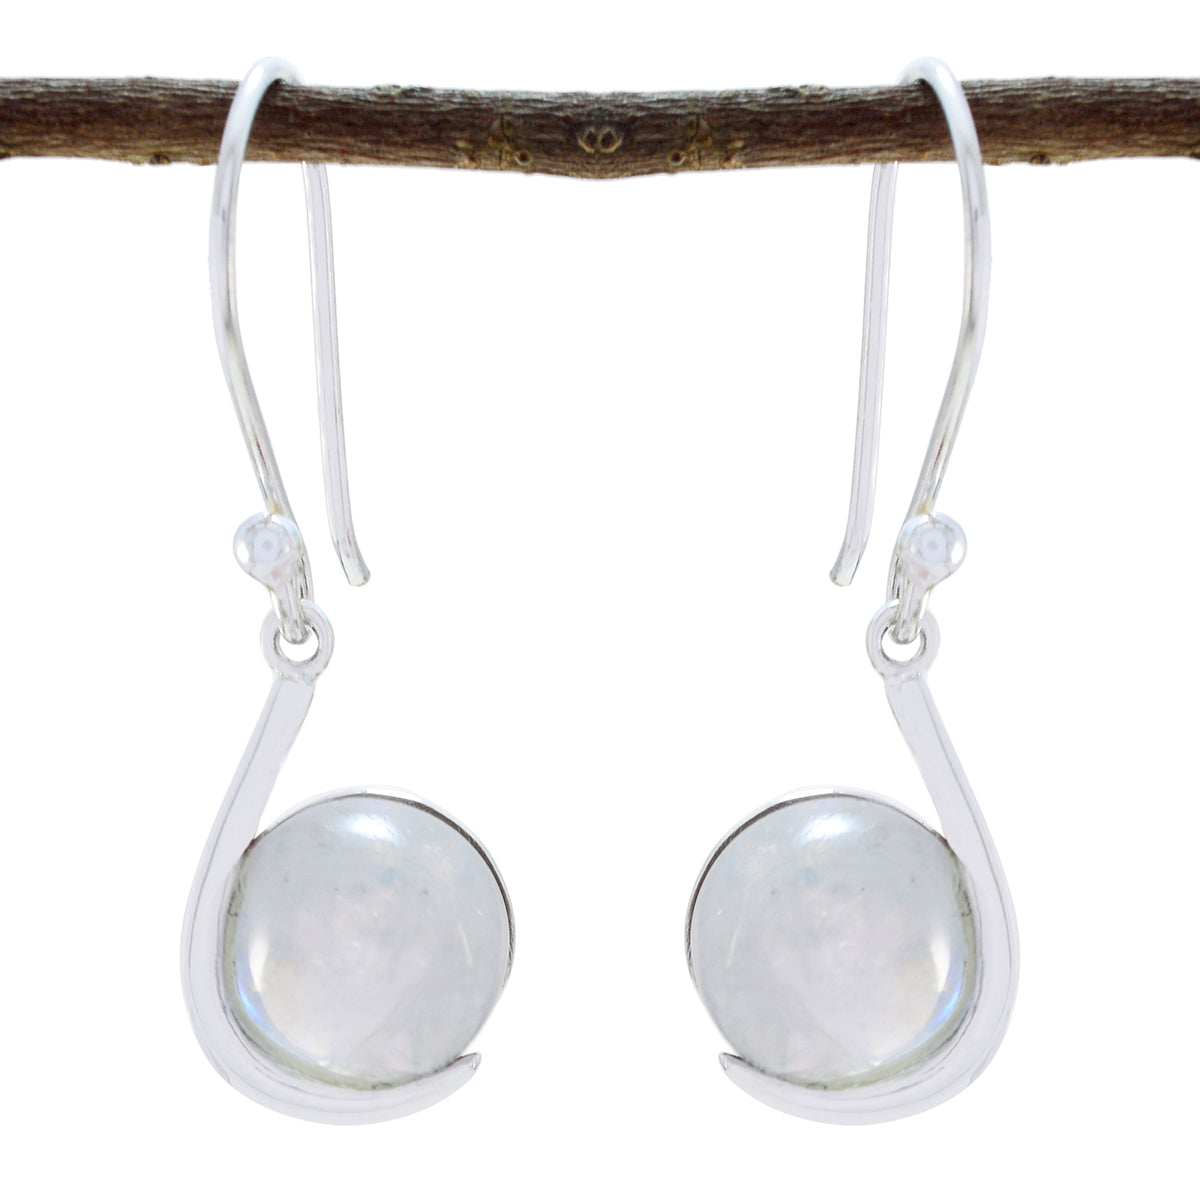 Riyo Good Gemstones round Cabochon White Rainbow Moonstone Silver Earrings st. patricks day gift